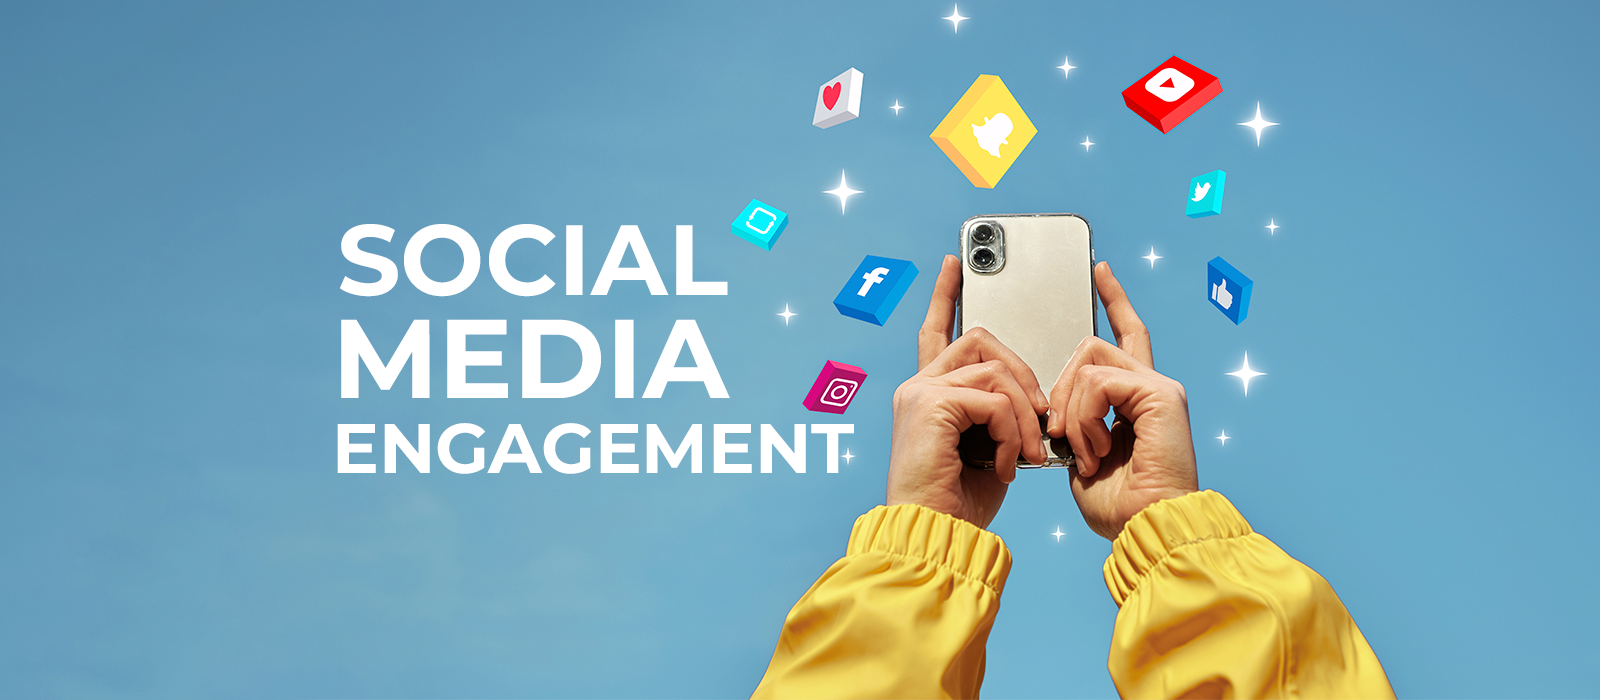 social media engagement 1